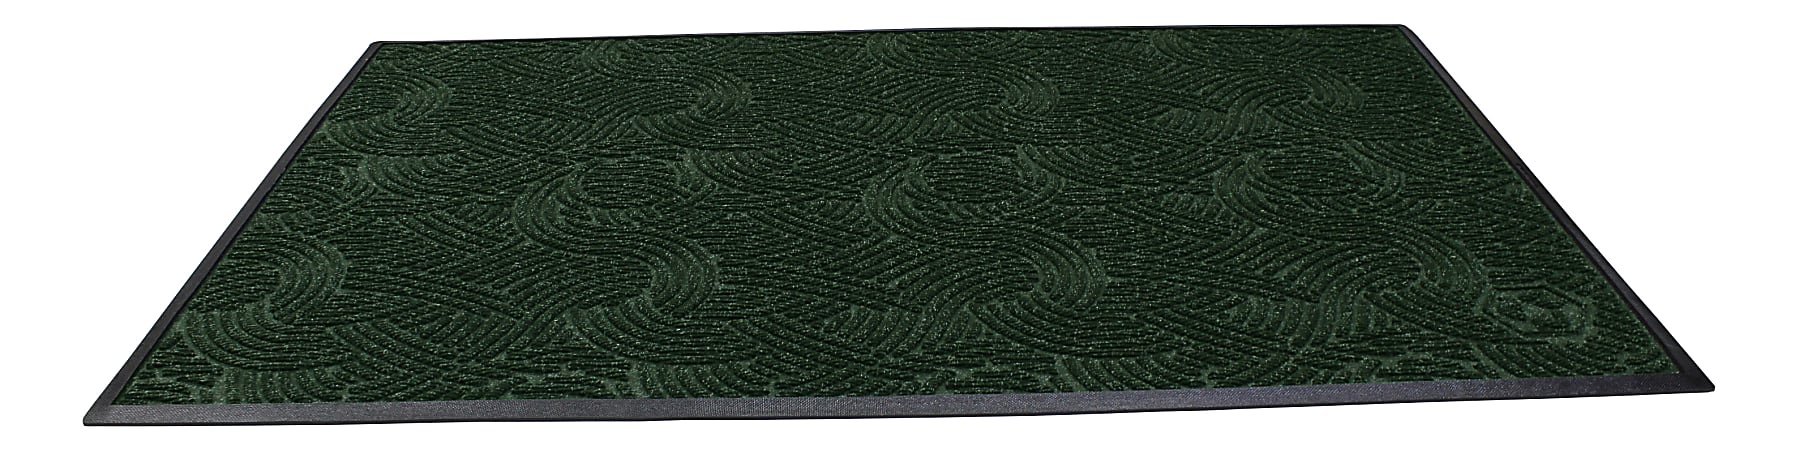 Waterhog Plus Swirl Floor Mat, 48" x 72", 100% Recycled, Southern Pine